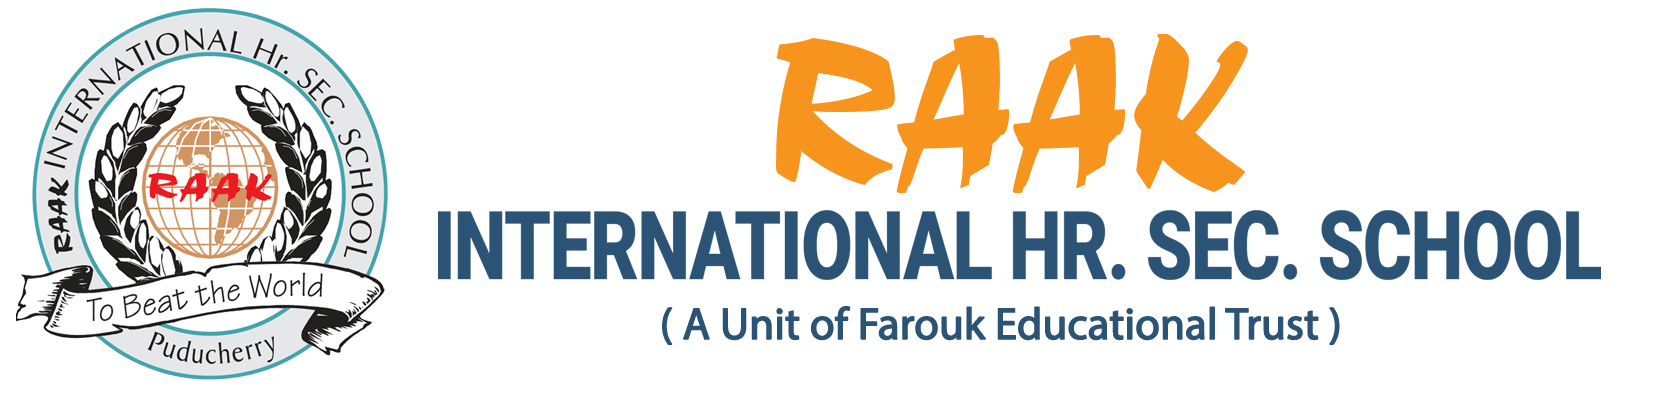 RAAK INTERNATIONAL HR SE SCHOOL